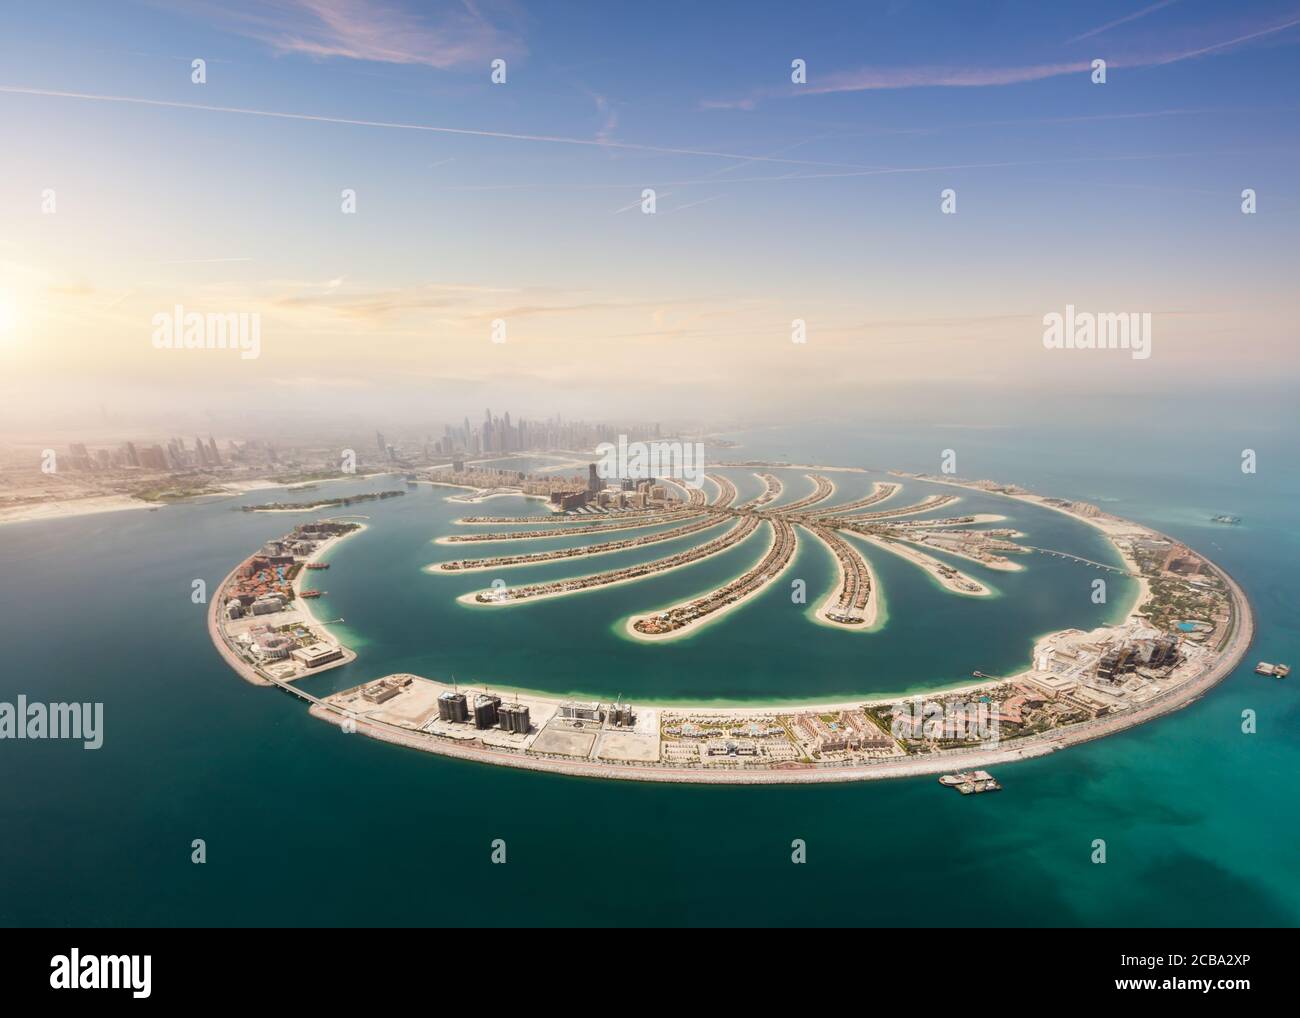 Aerial view of artificial Palm island, Dubai, United Arab Emirates Stock Photo